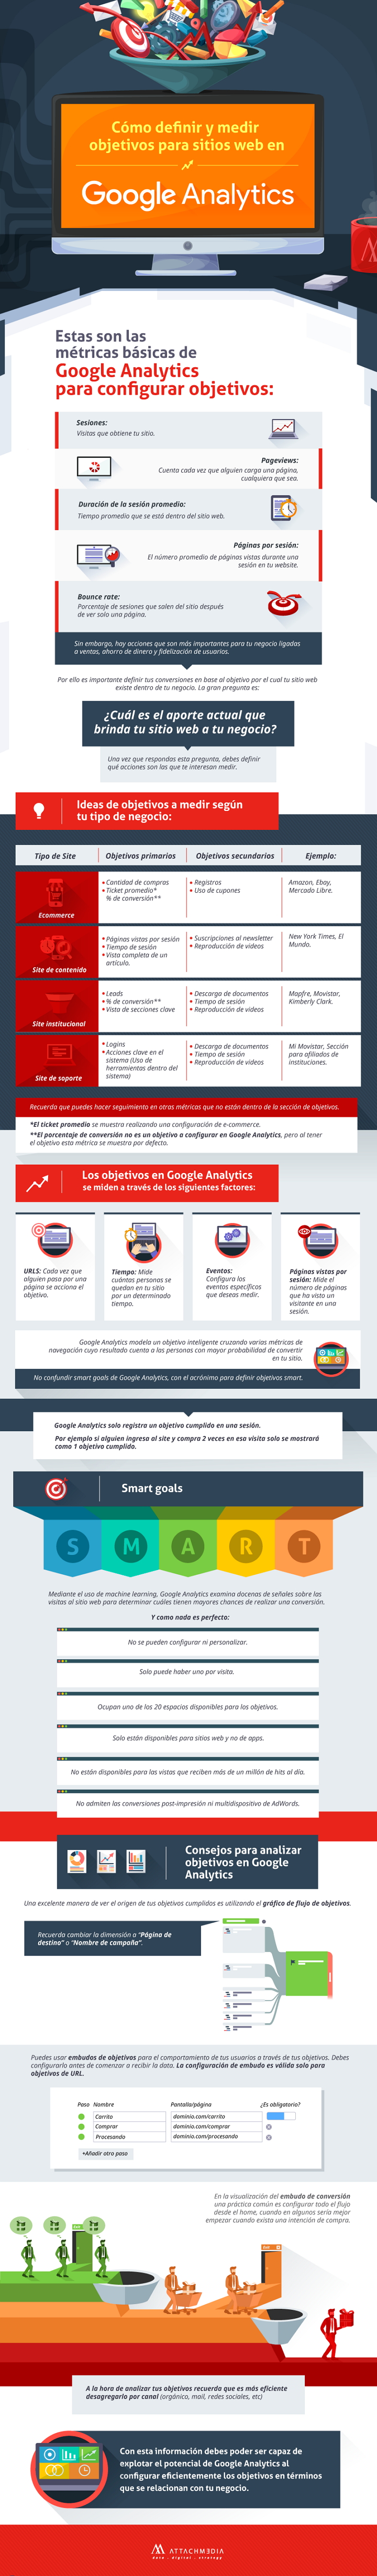 Google Analytics - Definir y Medir Objetivos